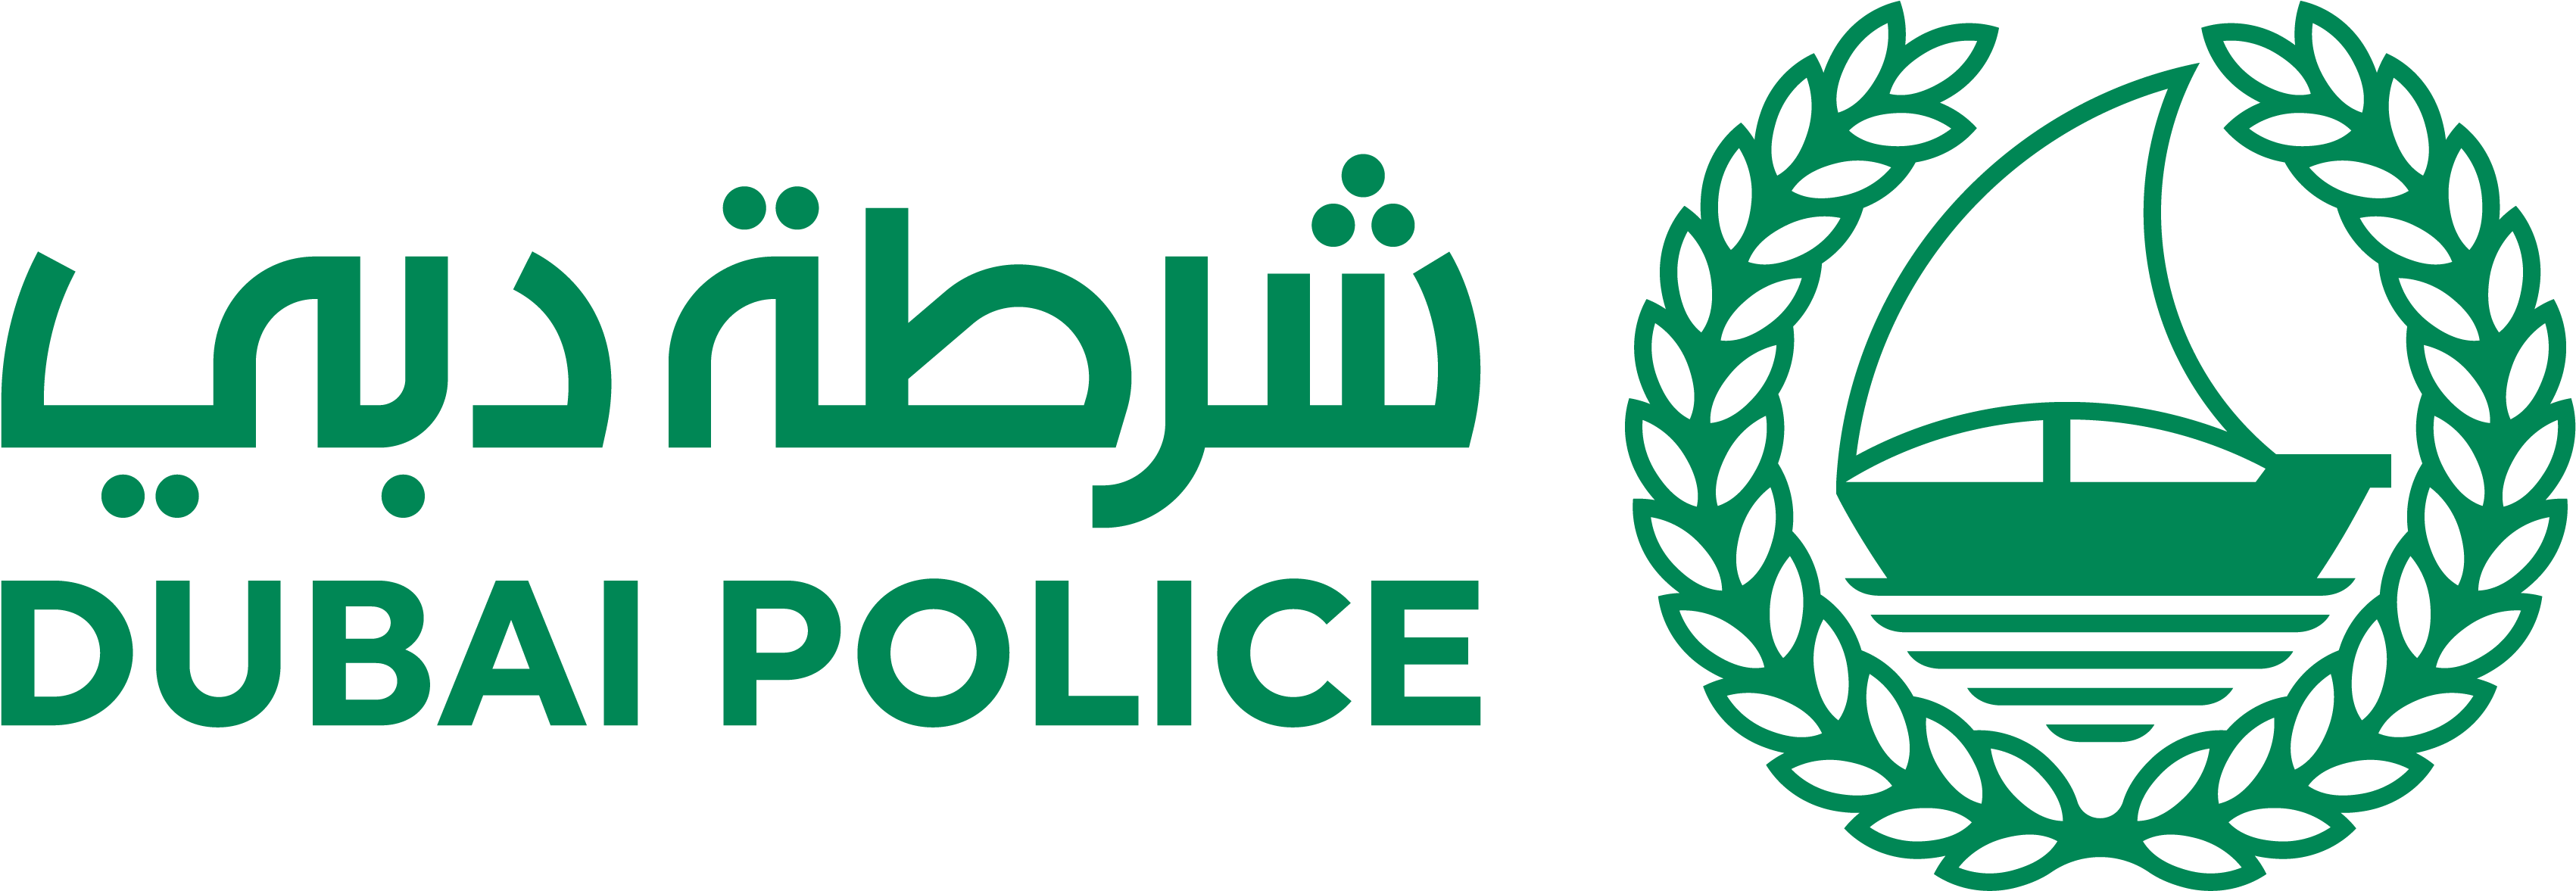 Dubai Police Logo Png (4165x1940)